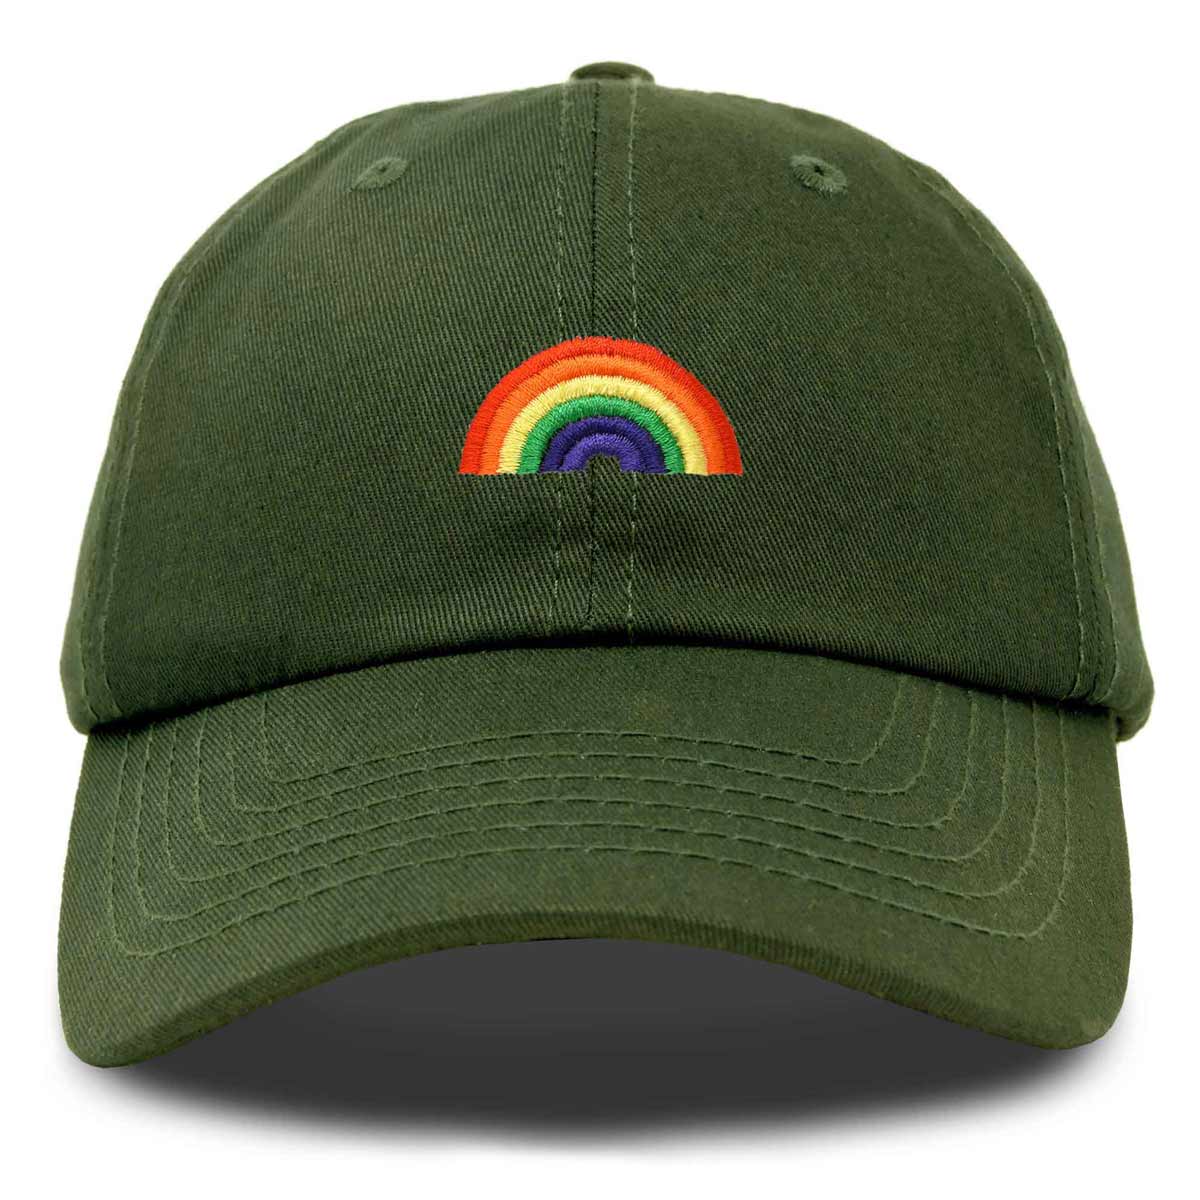 Rainbow Baseball Cap - Olive